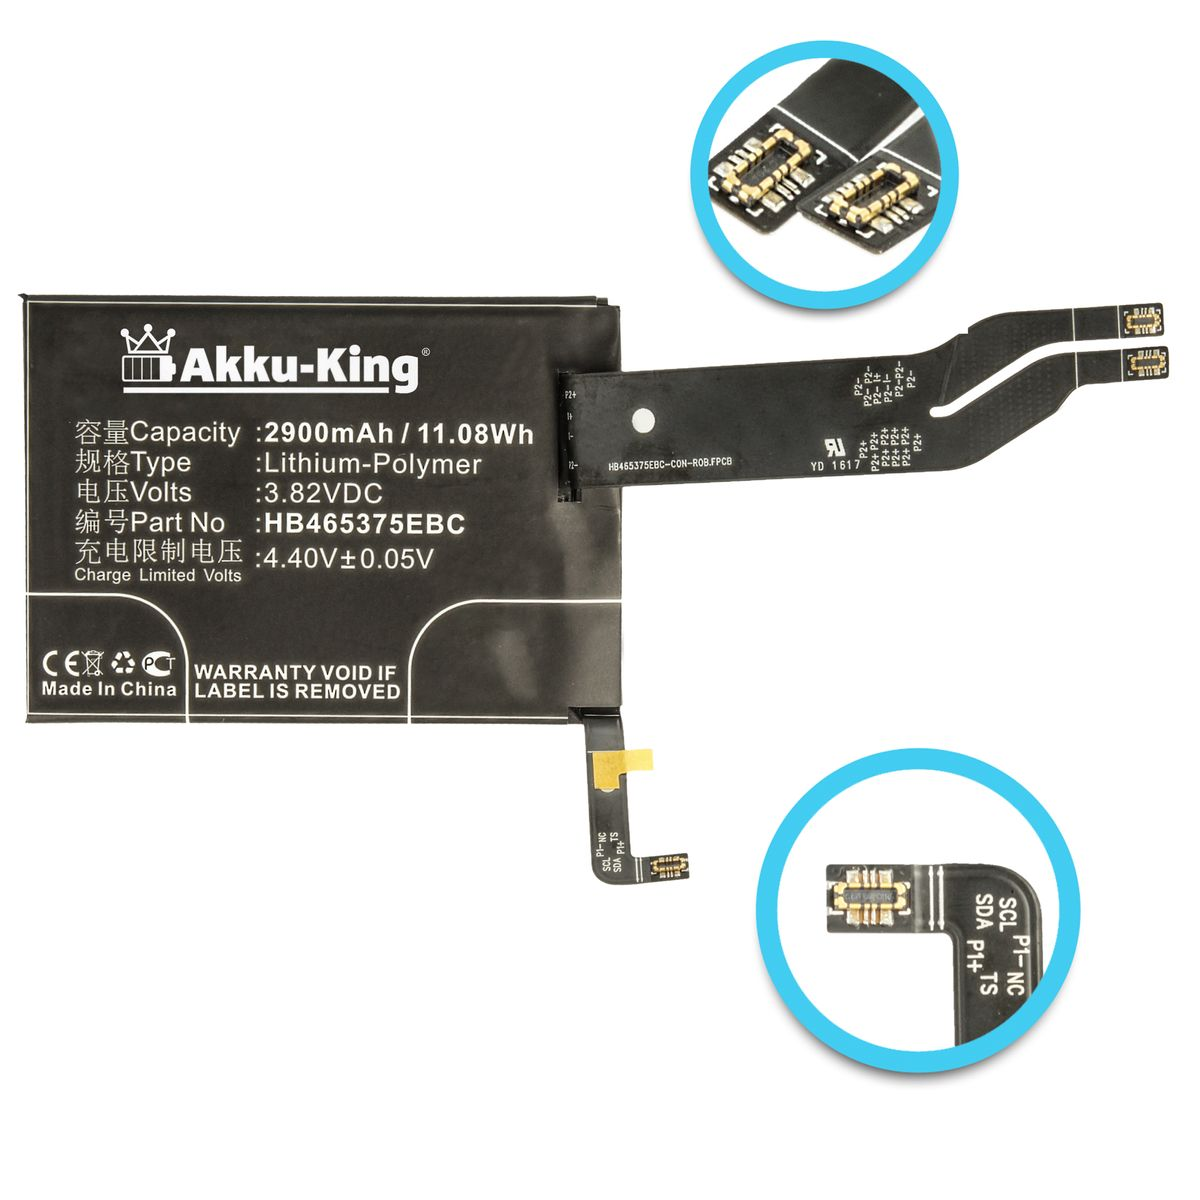 Volt, 3.8 kompatibel AKKU-KING mit 2900mAh Huawei Akku Li-Polymer HB465375EBC Handy-Akku,